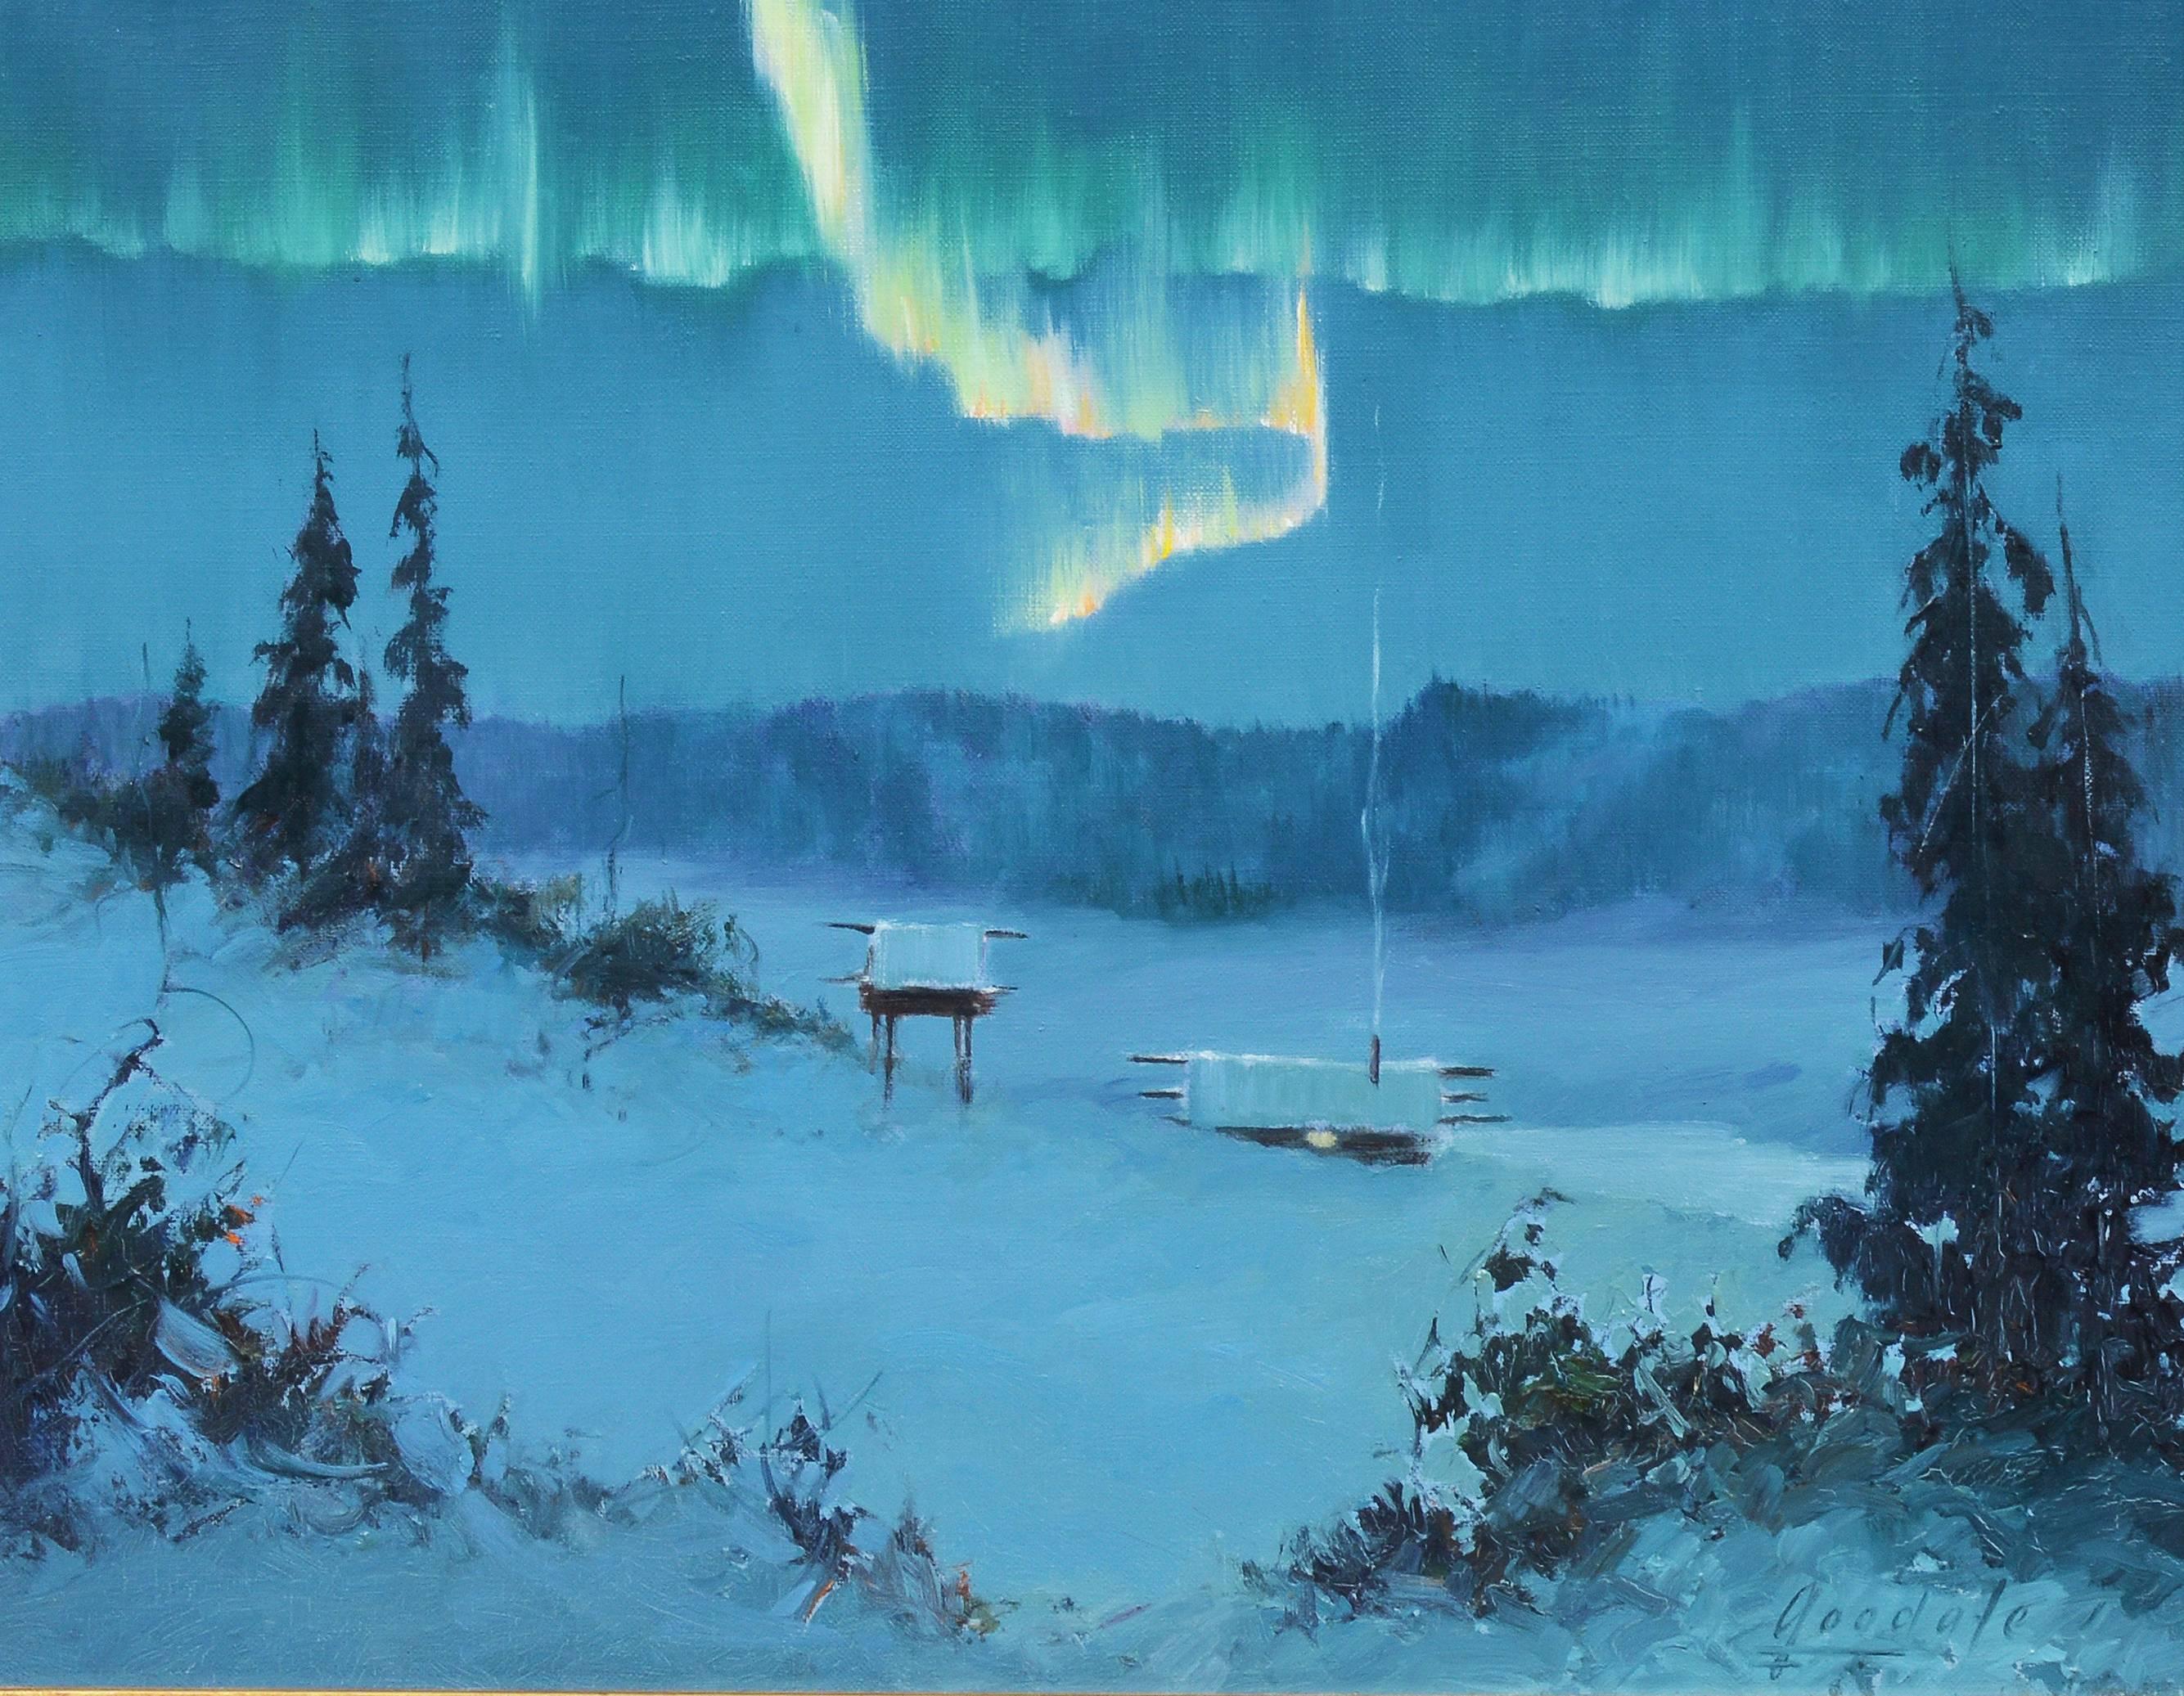 Auror Borealis, Alaskan Nocturnal View by Ellen Goodale 1934 1